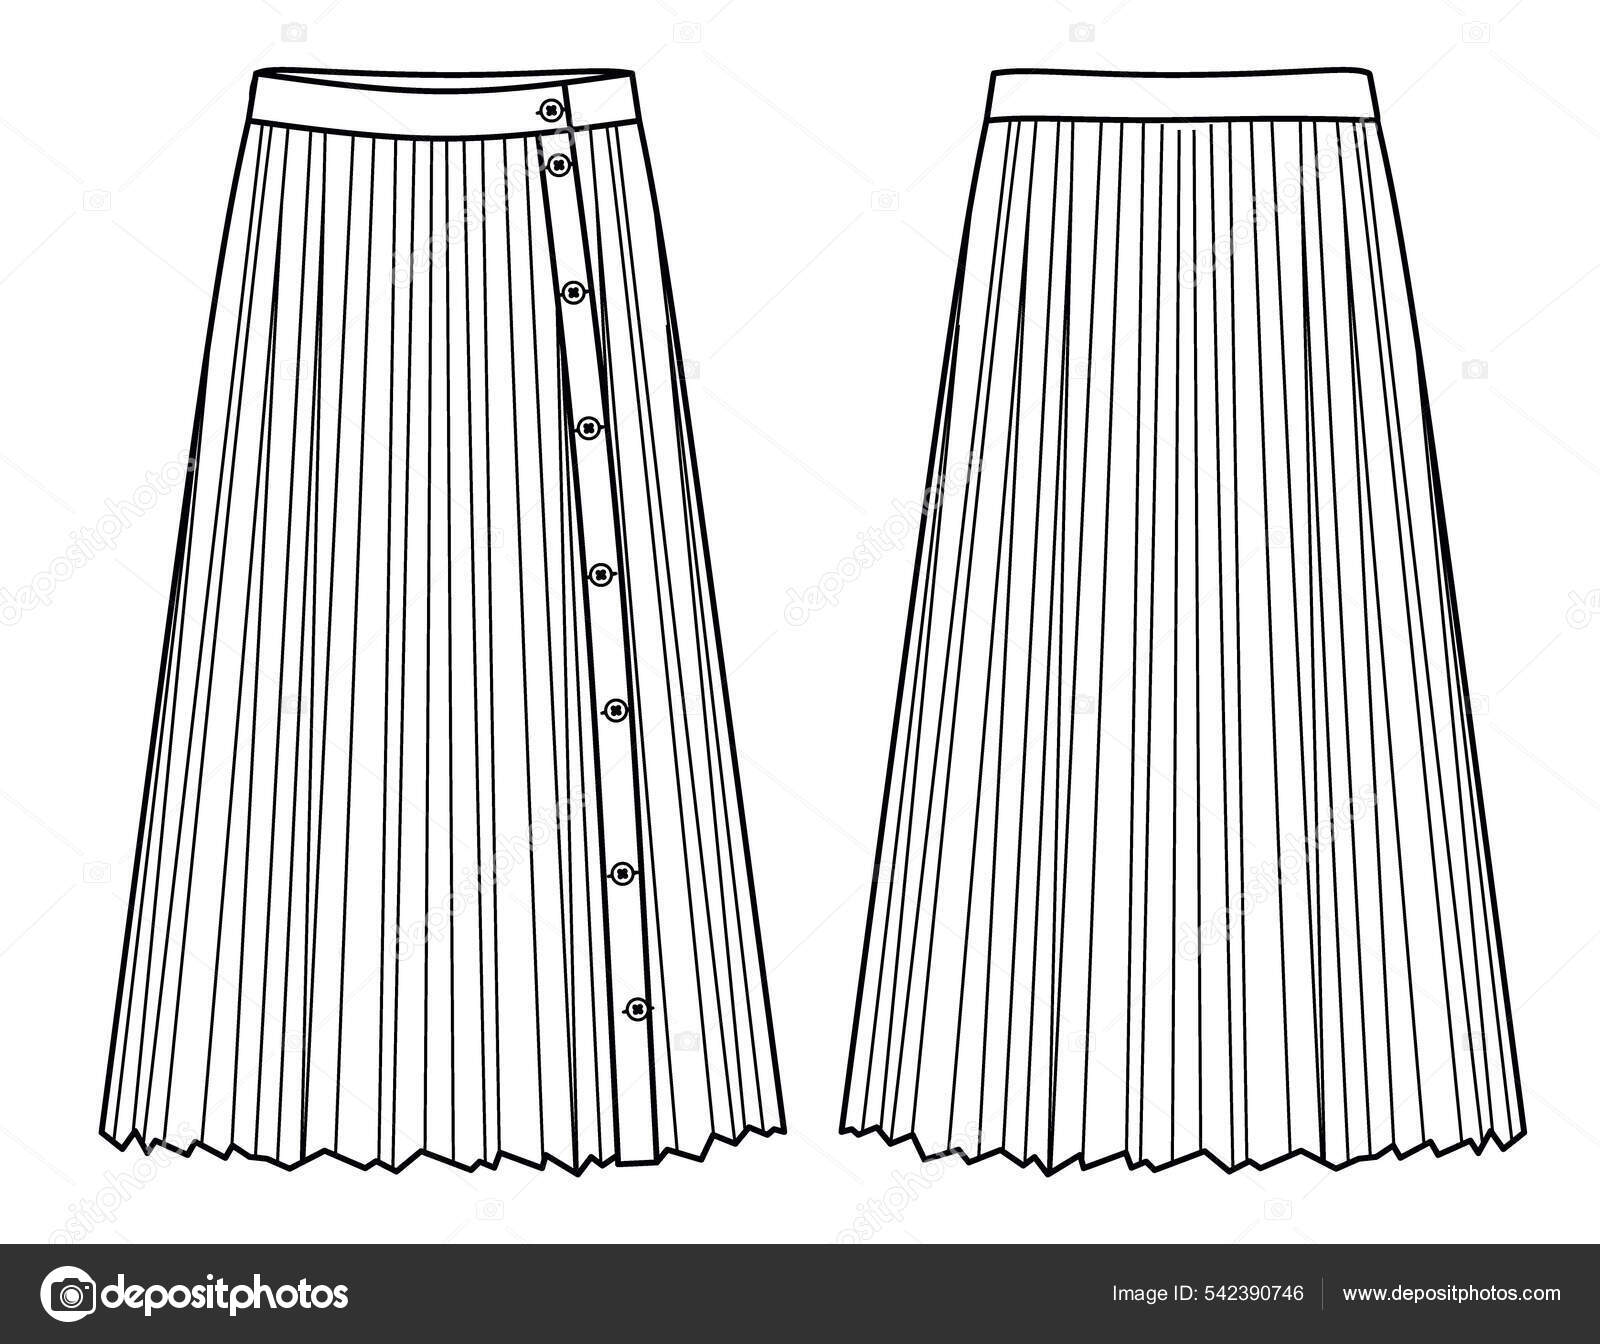 depositphotos 542390746 stock illustration vector plisse skirt fashion cad